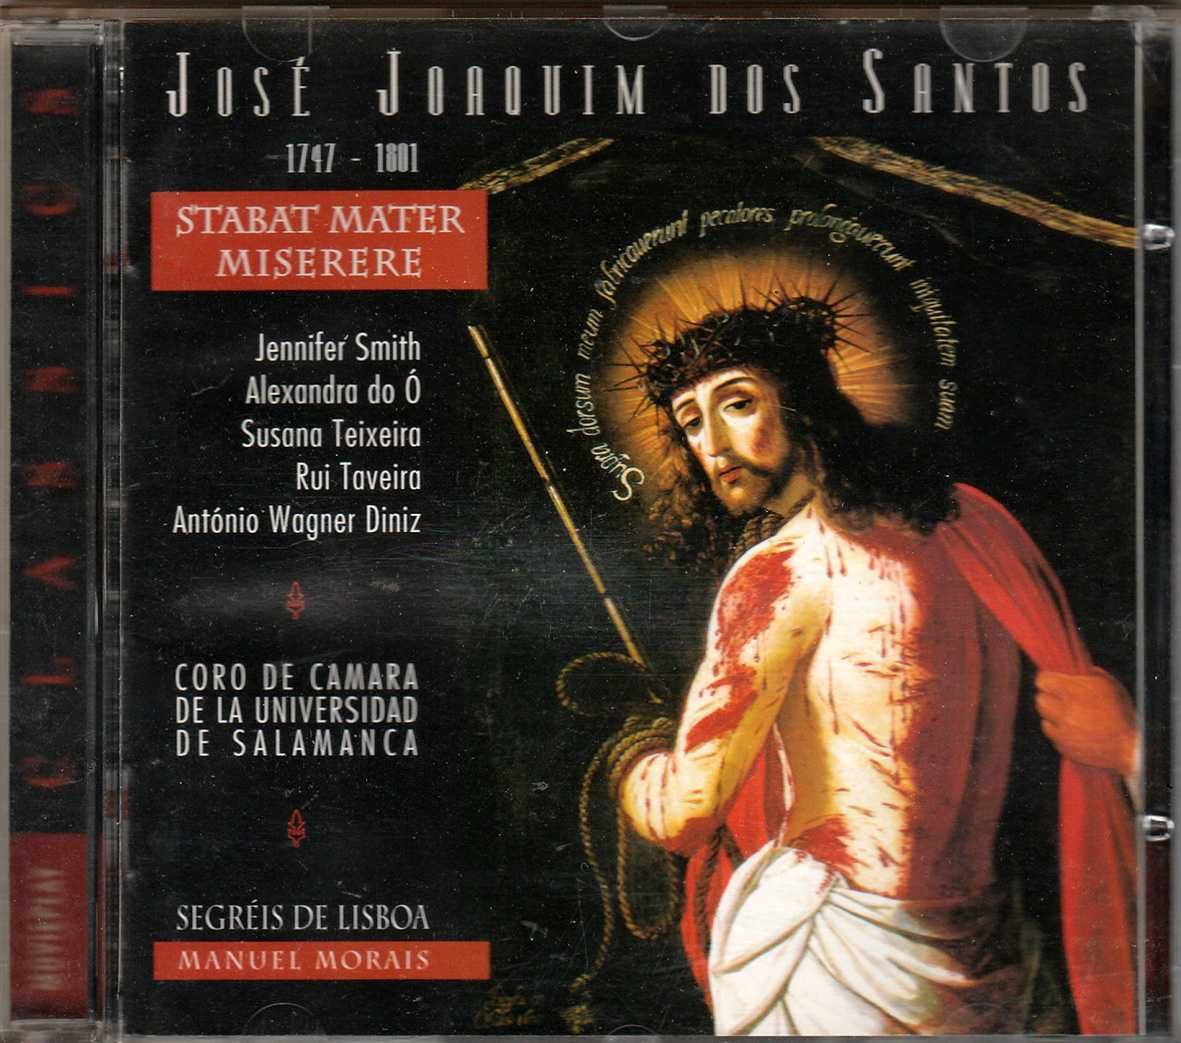 CD José Joaquim dos Santos - Stabat Mater + Miserere